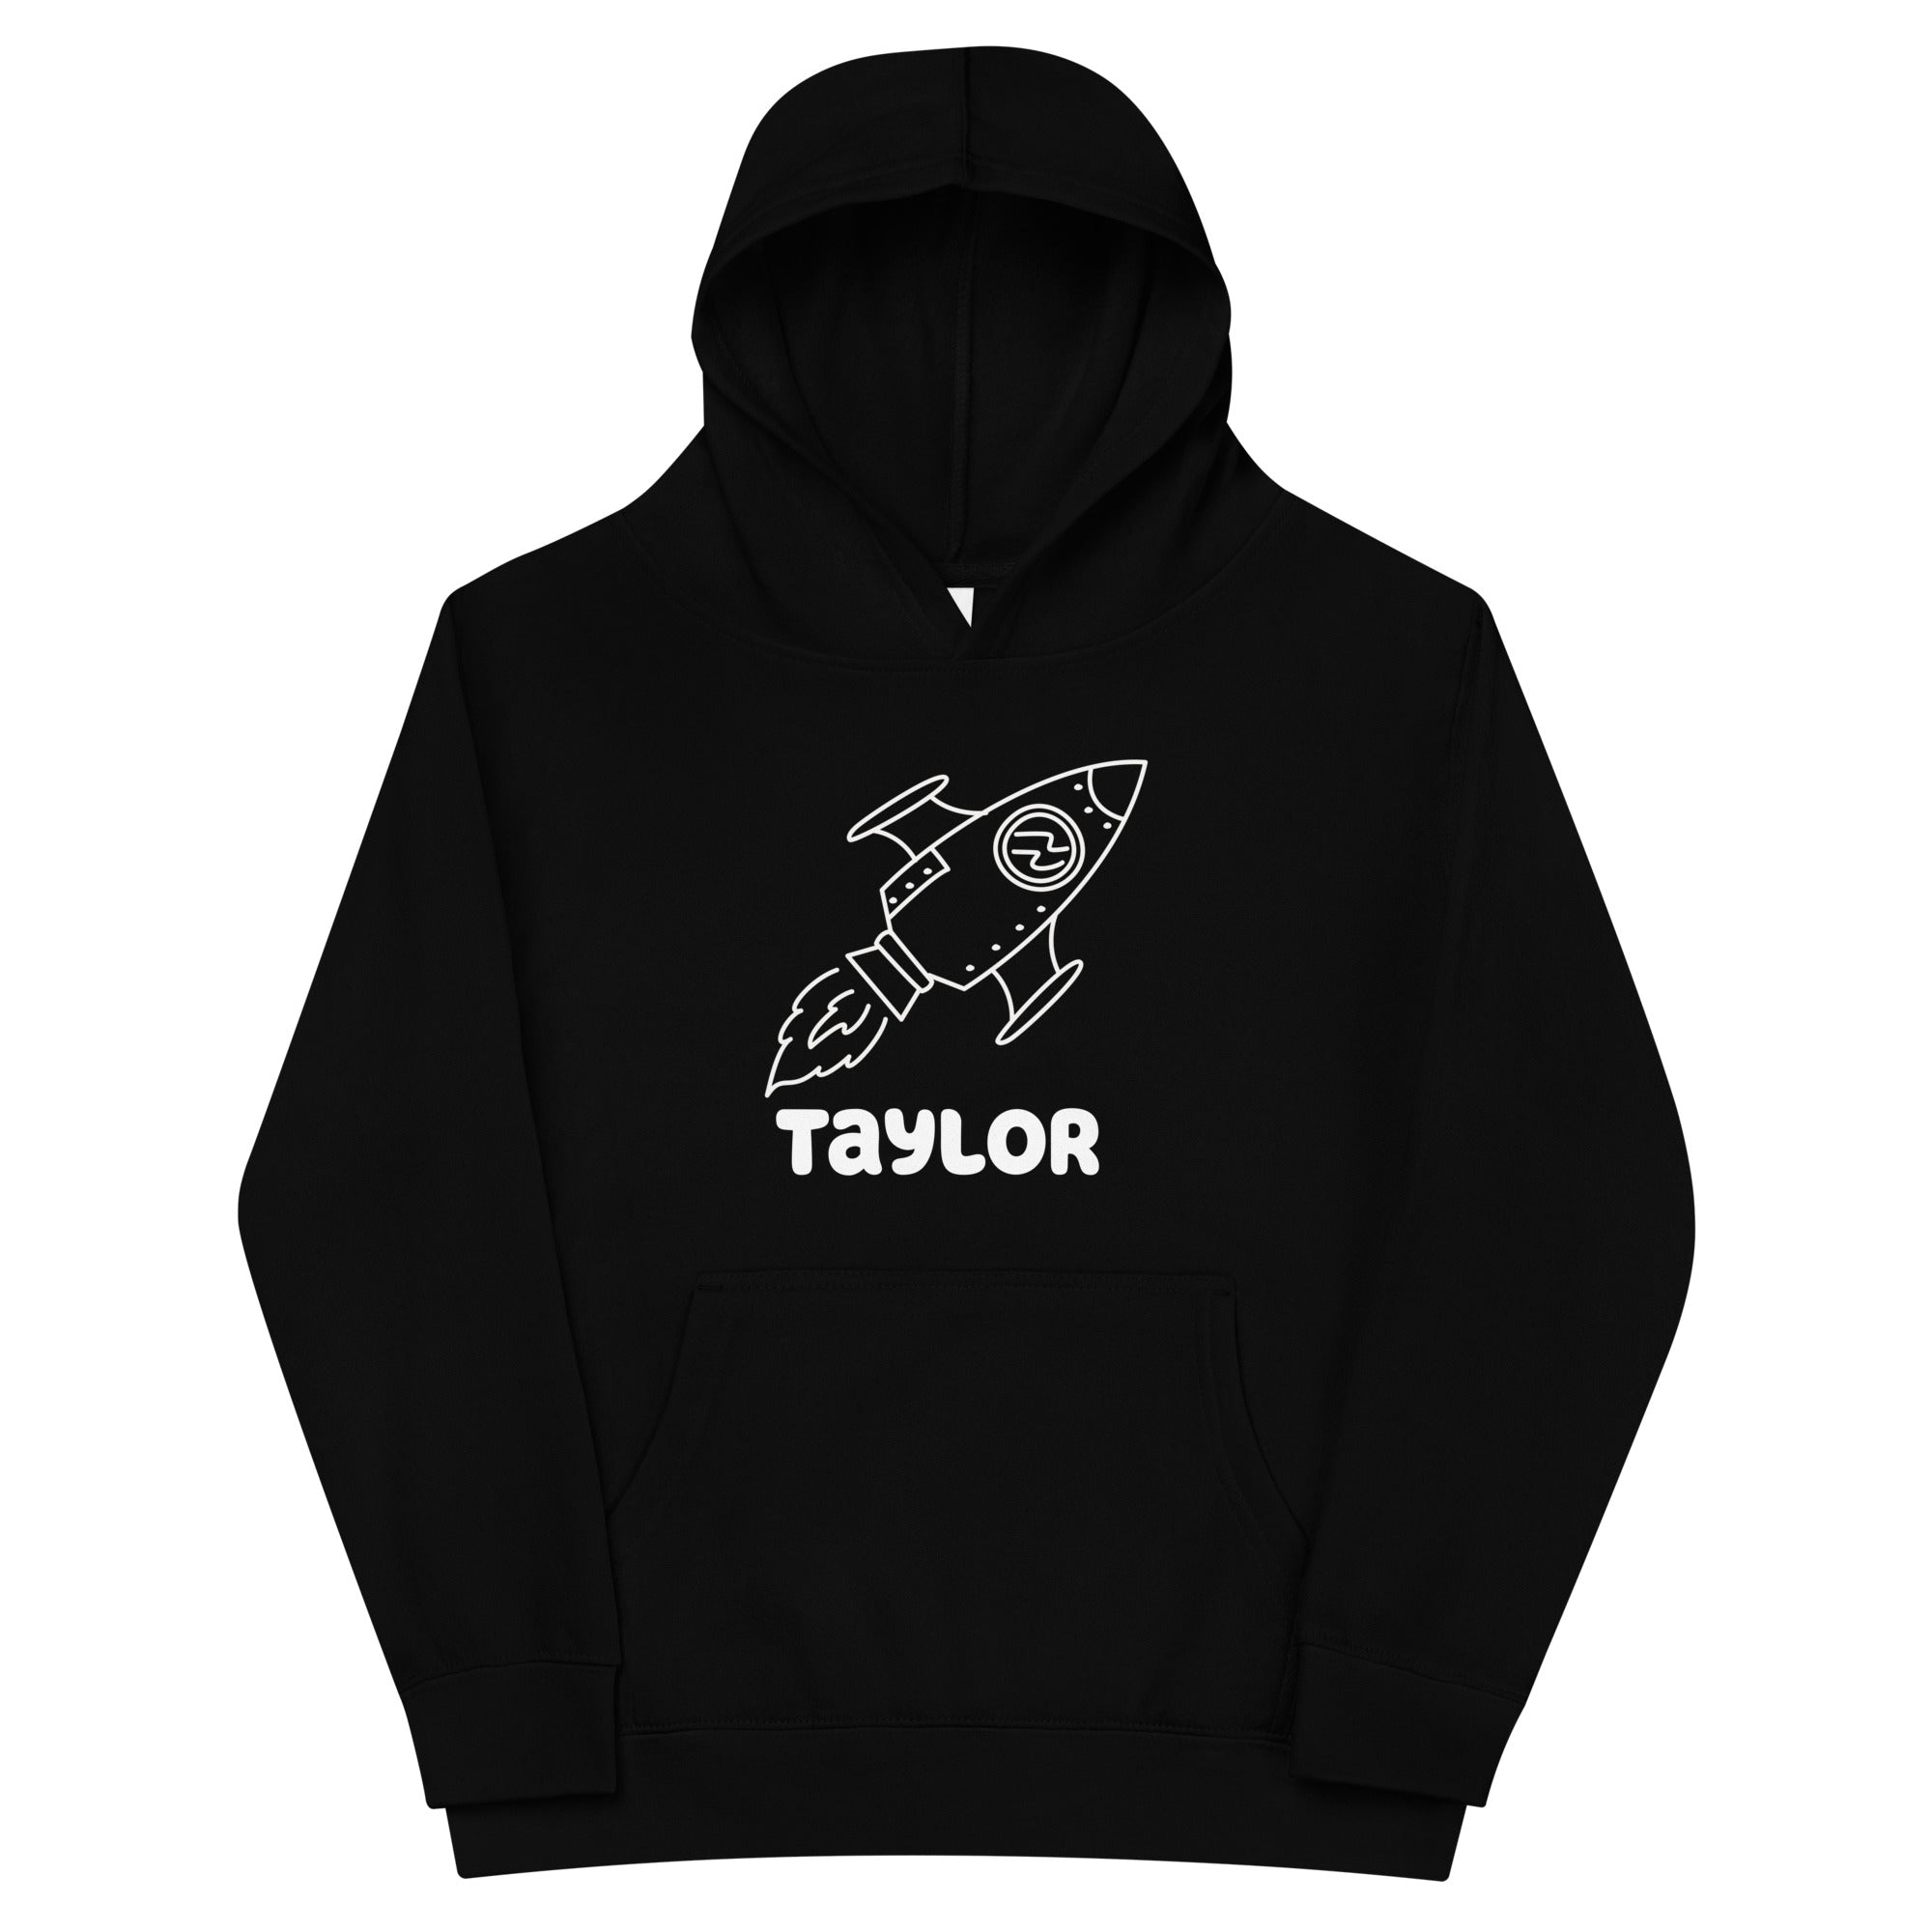 Black sweatshirt for kids with a rocket ship design